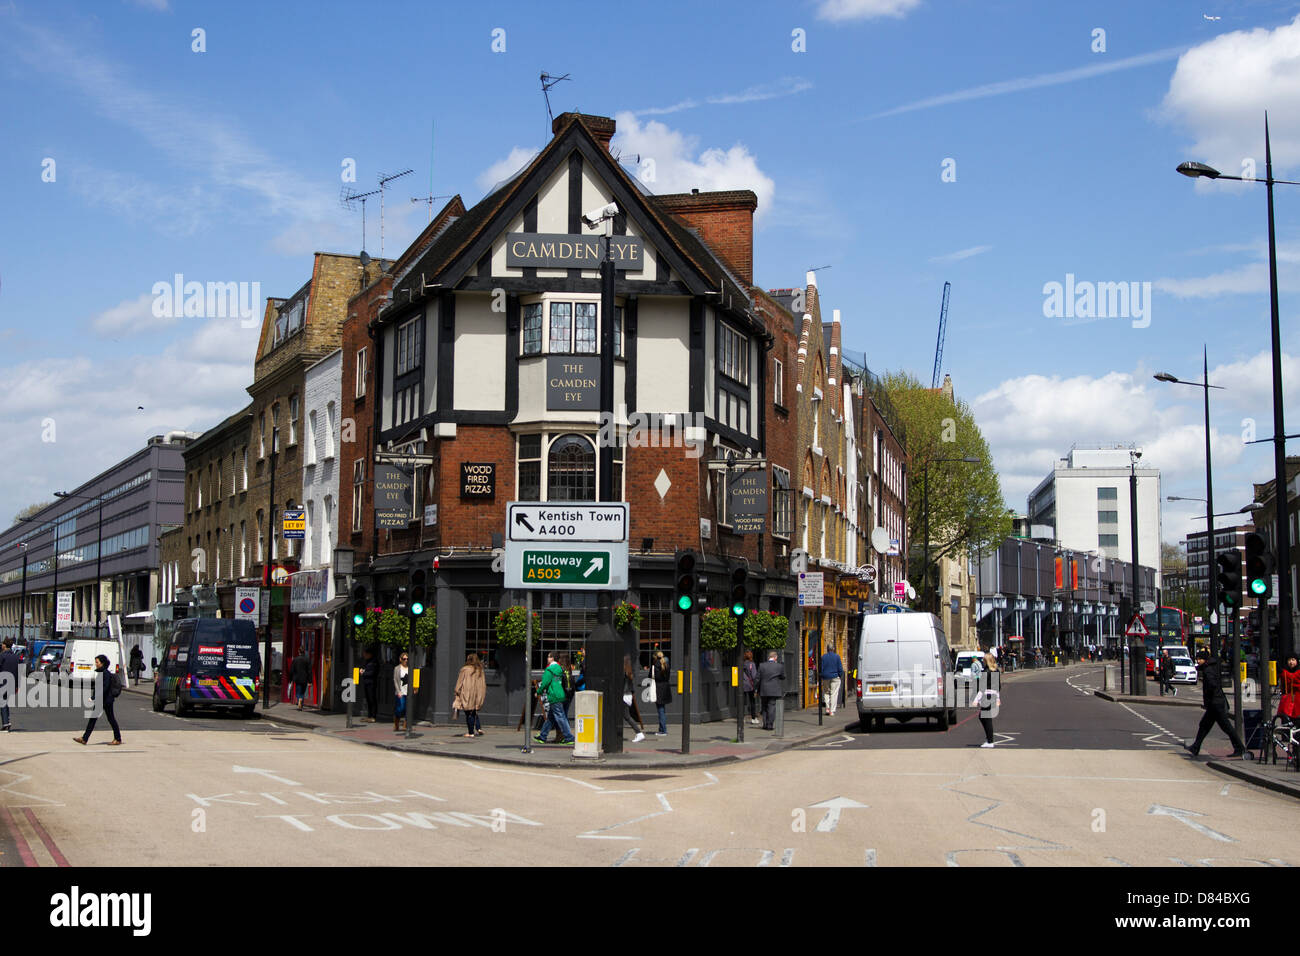 Camden Eye Pub Stock Photo